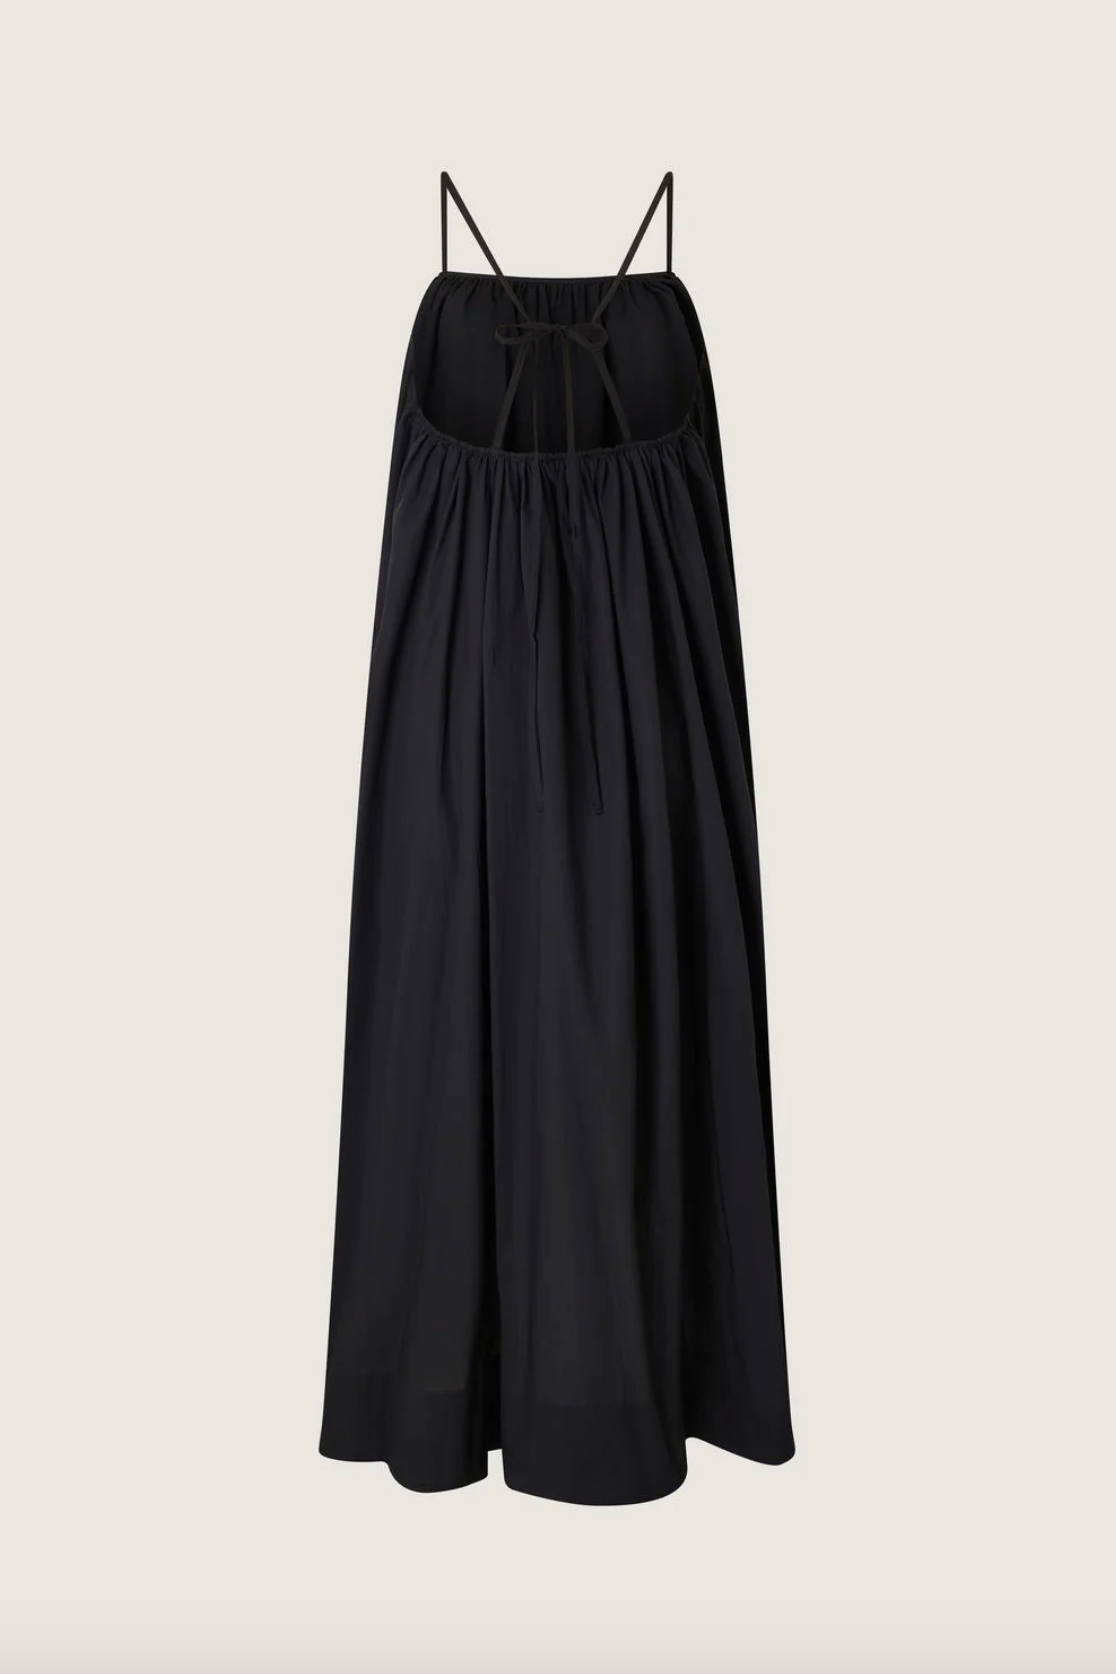 Soeur - Arielle Black Maxi Dress - Image 7 of 7